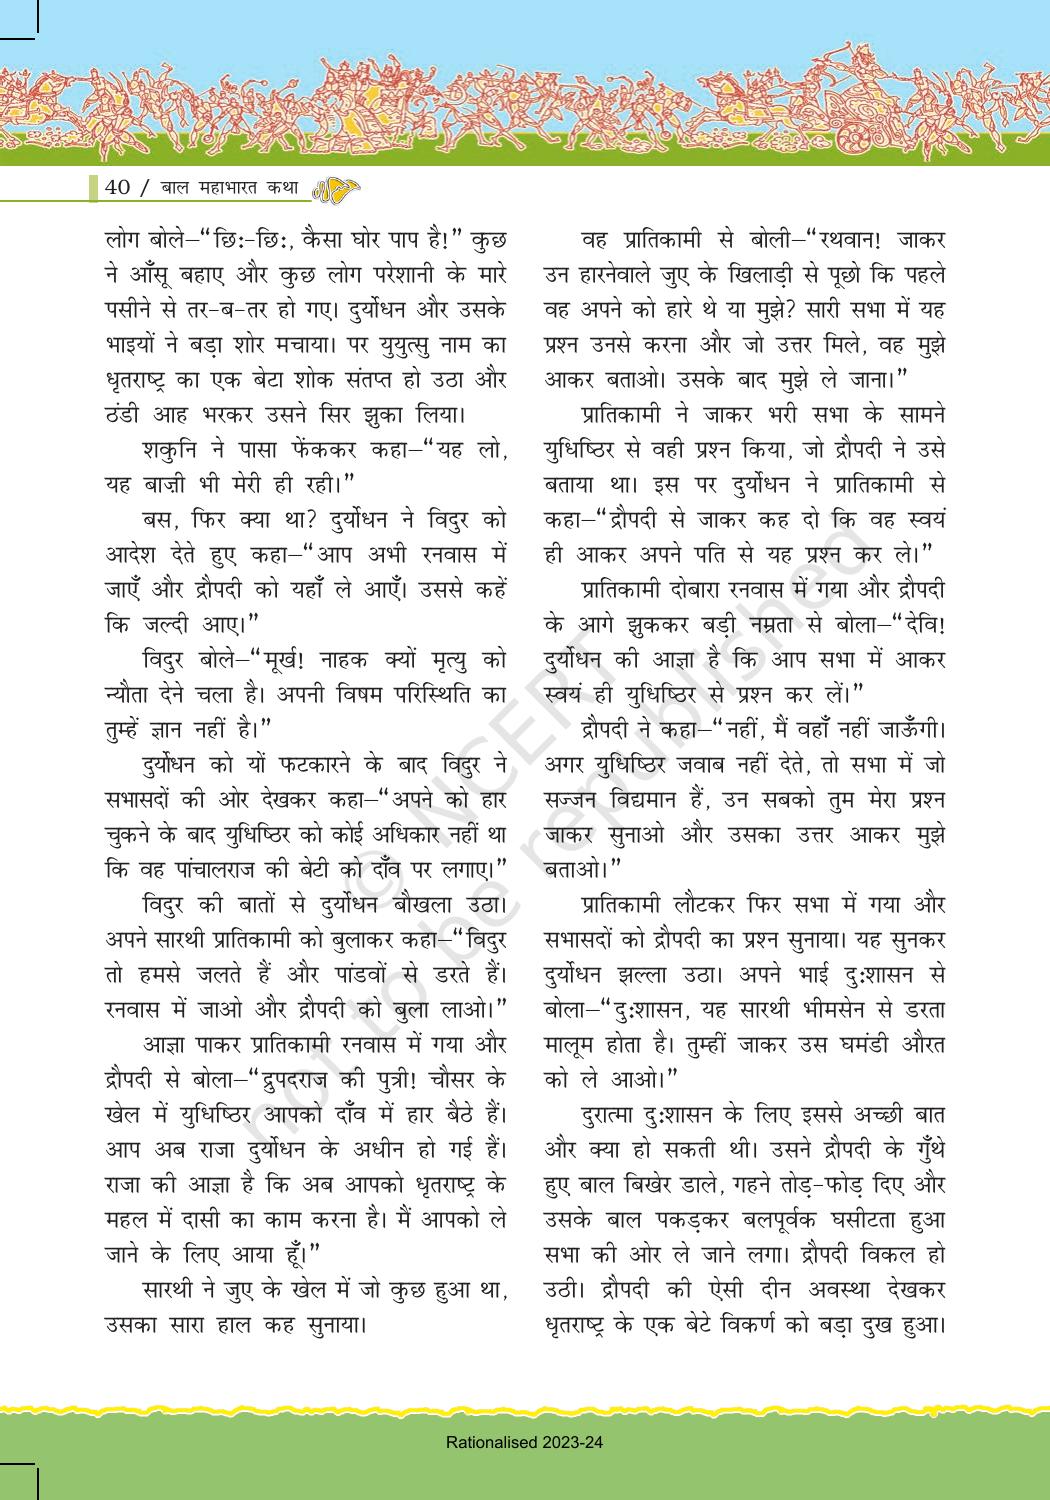 NCERT Book for Class 7 Hindi: Chapter 1-बाल महाभारत कथा - Page 40